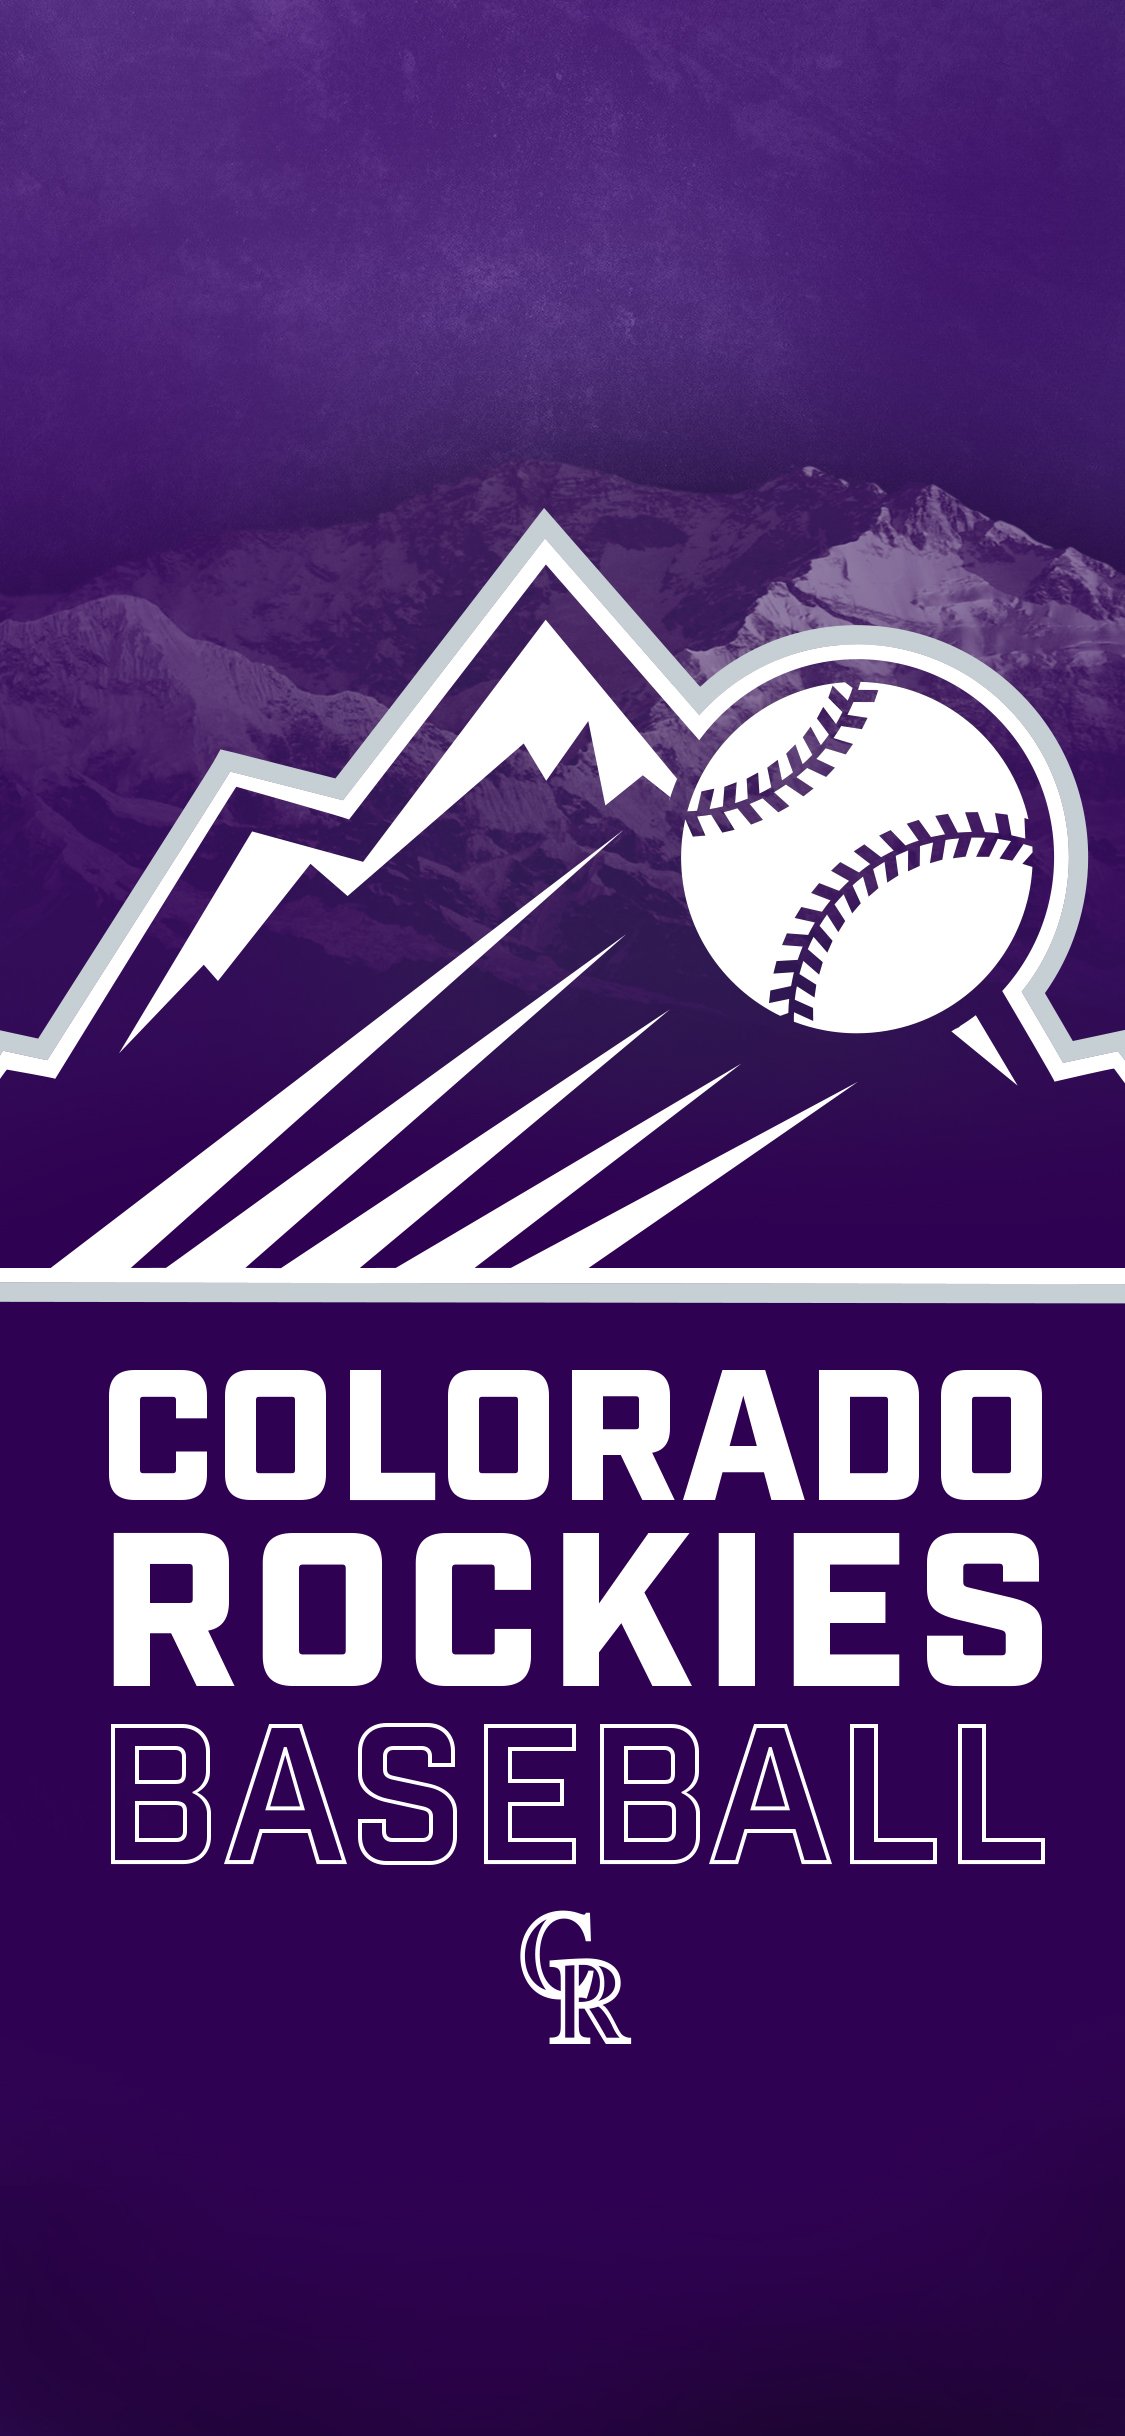 Colorado Rockies on X: Hey @ColoradoRapids, we're loving the new